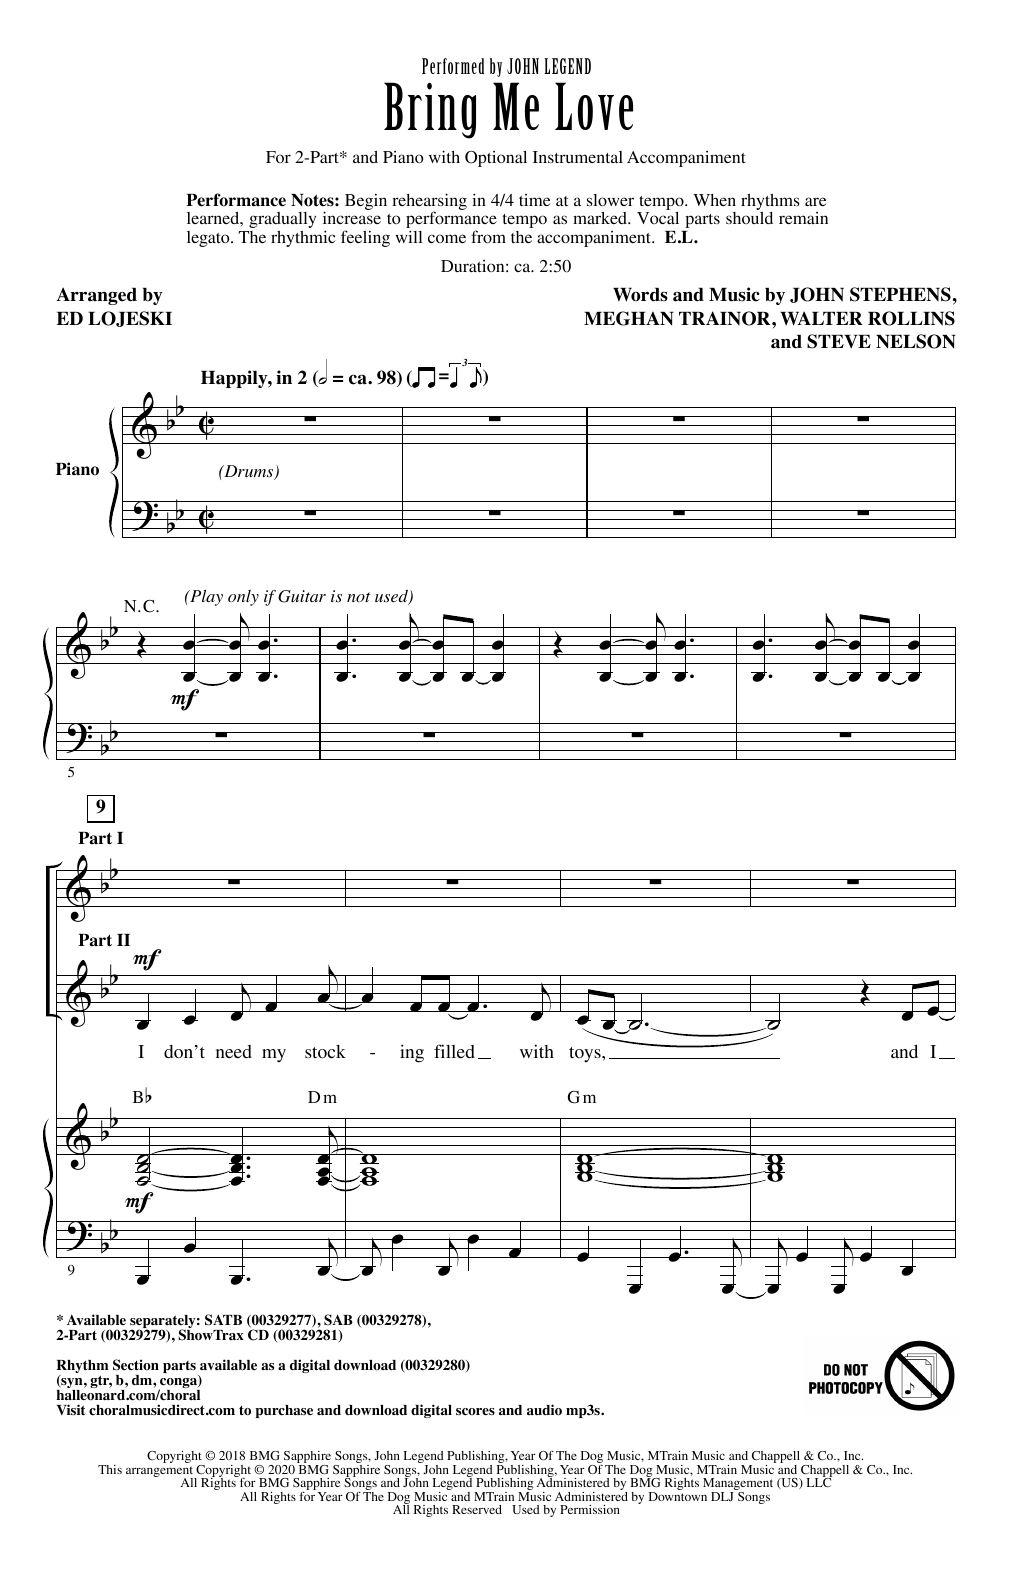 John Legend Bring Me Love (arr. Ed Lojeski) Sheet Music Notes & Chords for SATB Choir - Download or Print PDF